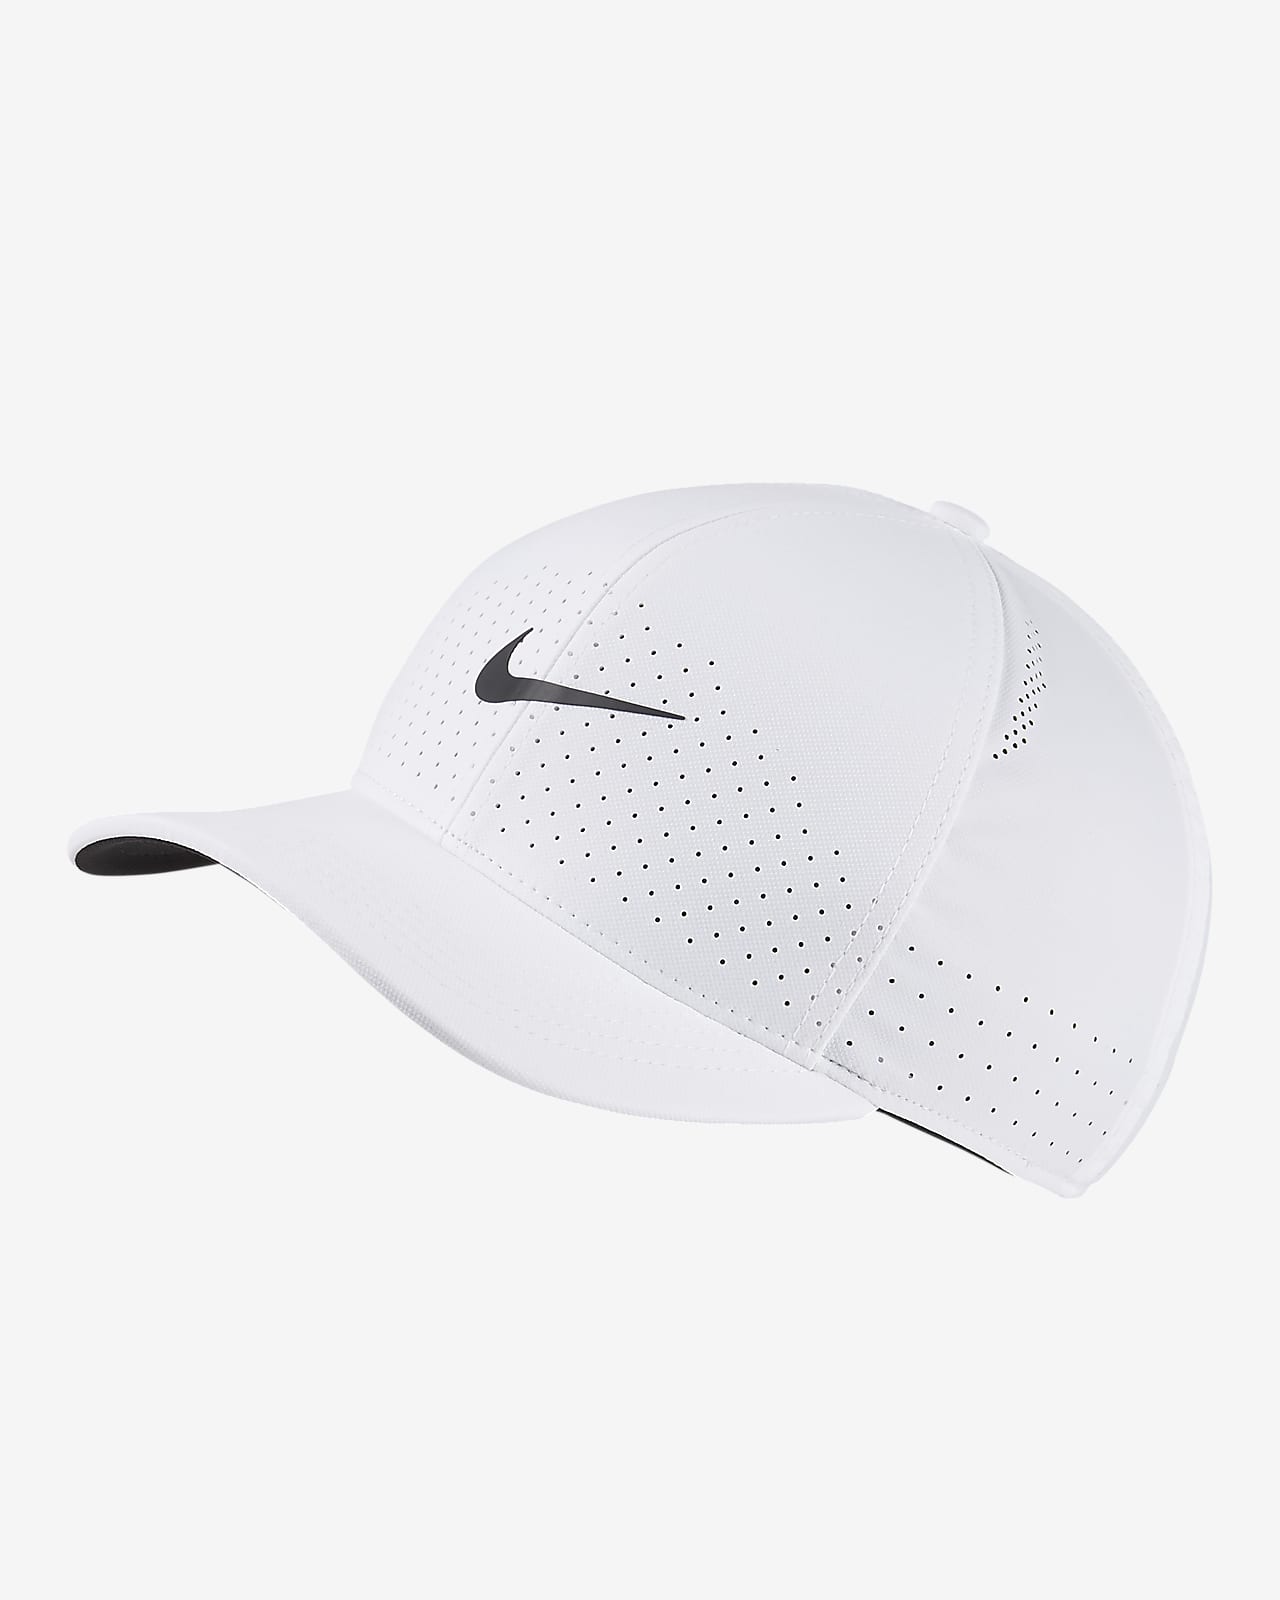 Men's Nike Aerobill Classic 99 Hat, White